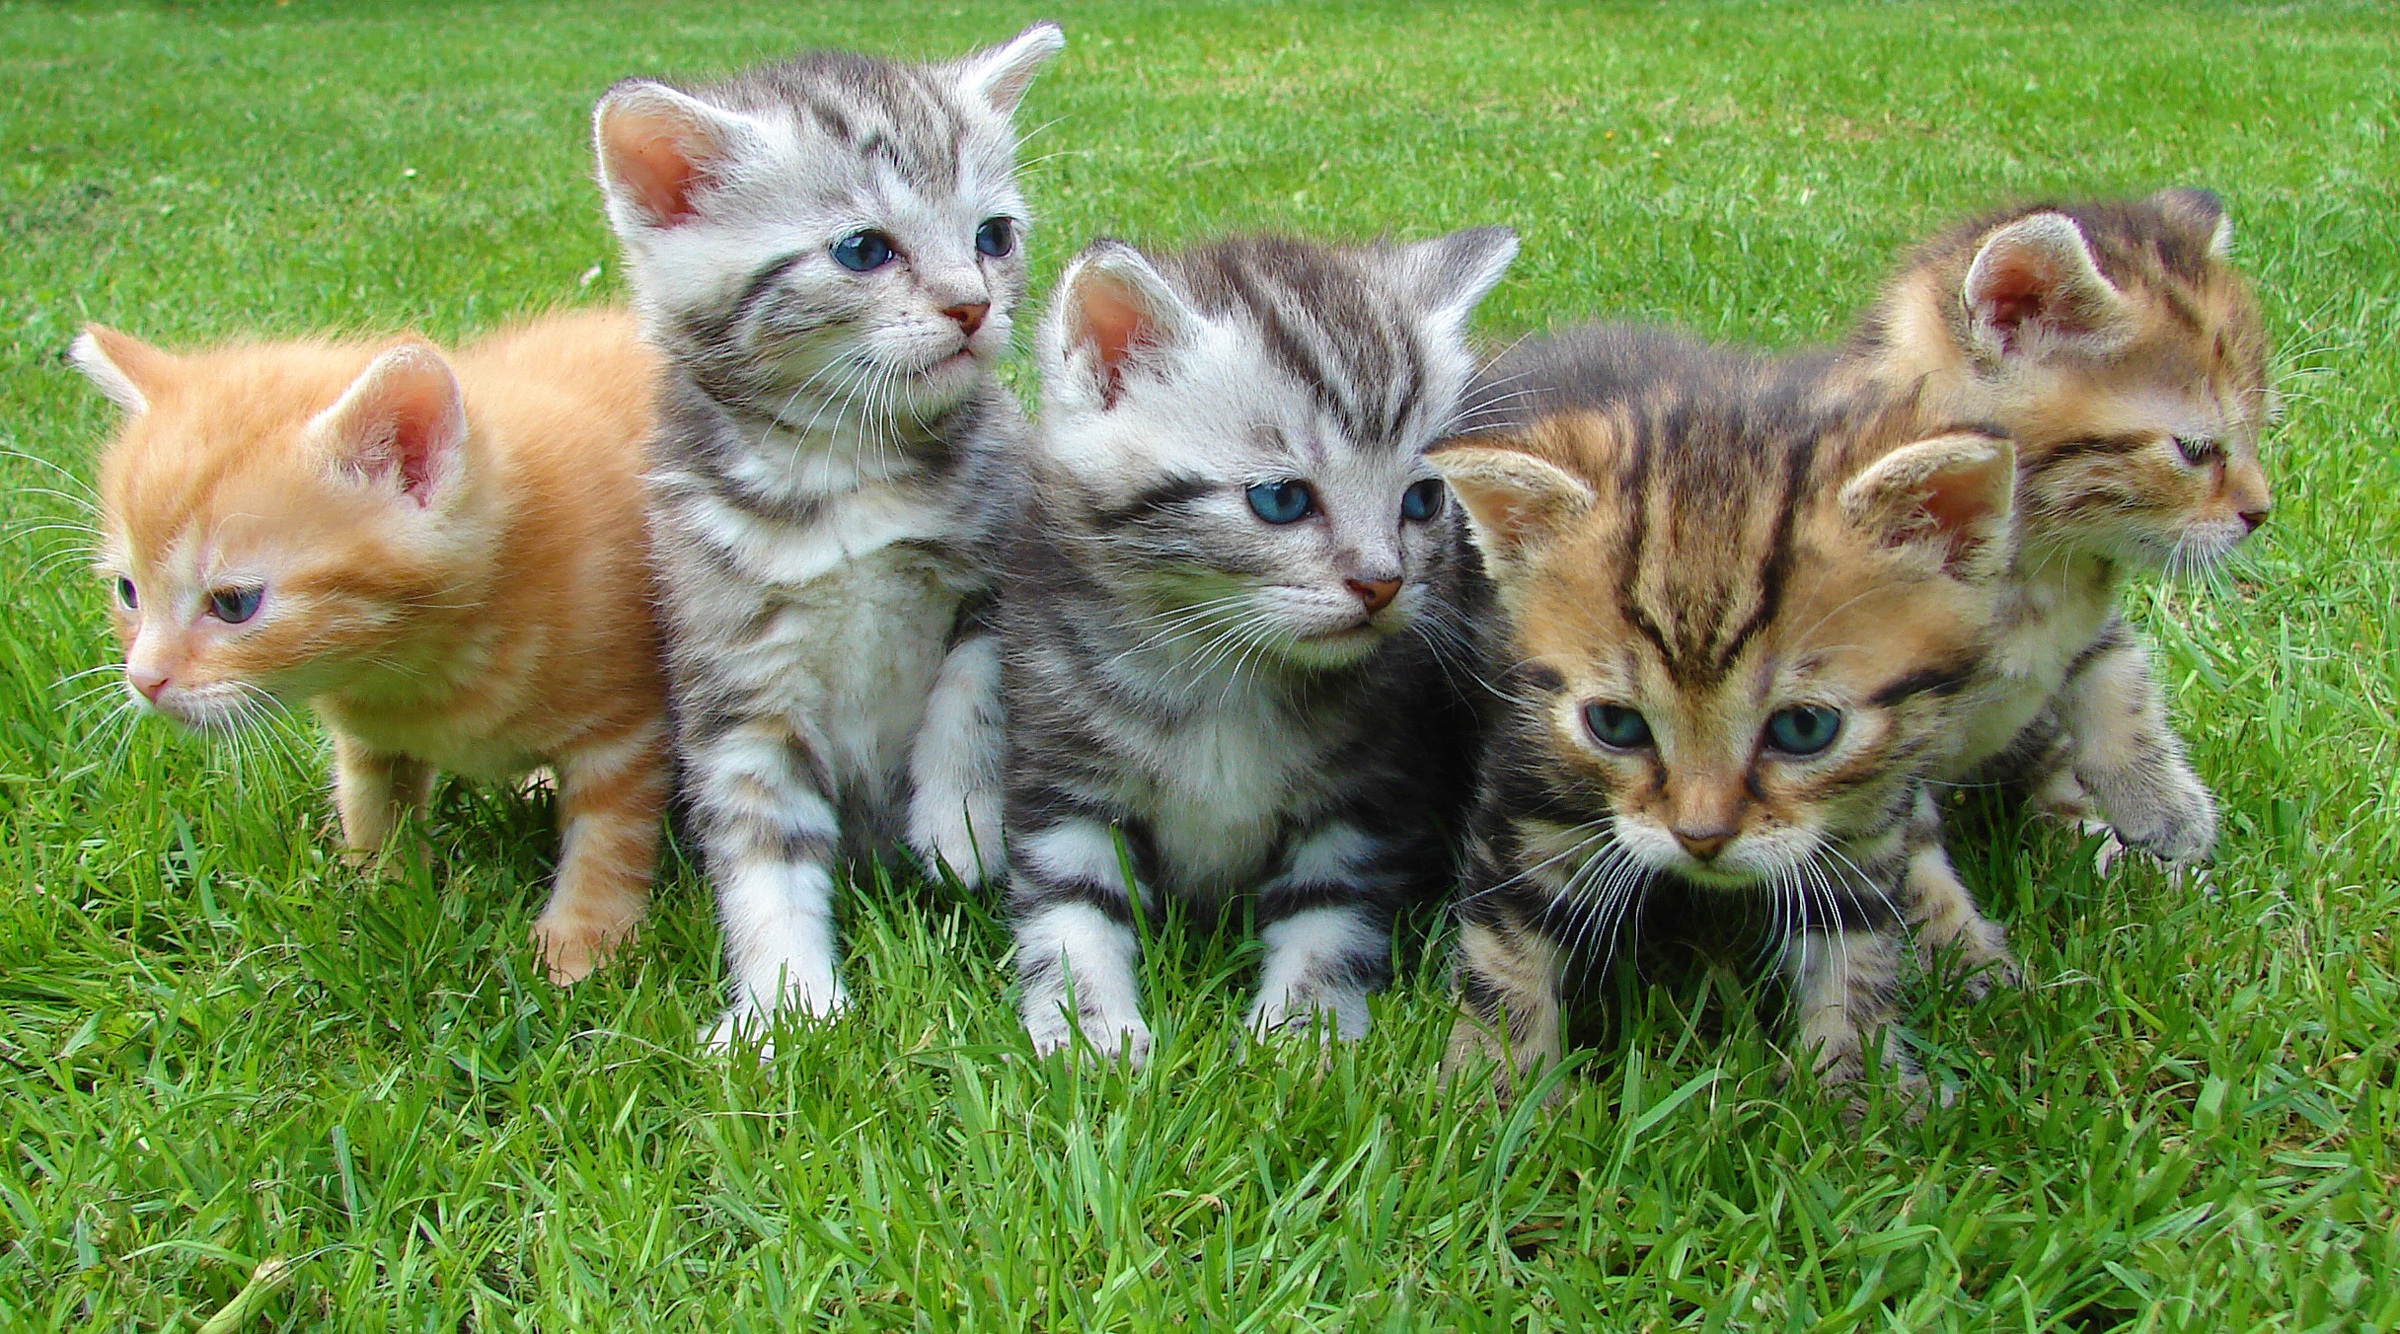 Kittens-in-the-grass.jpg